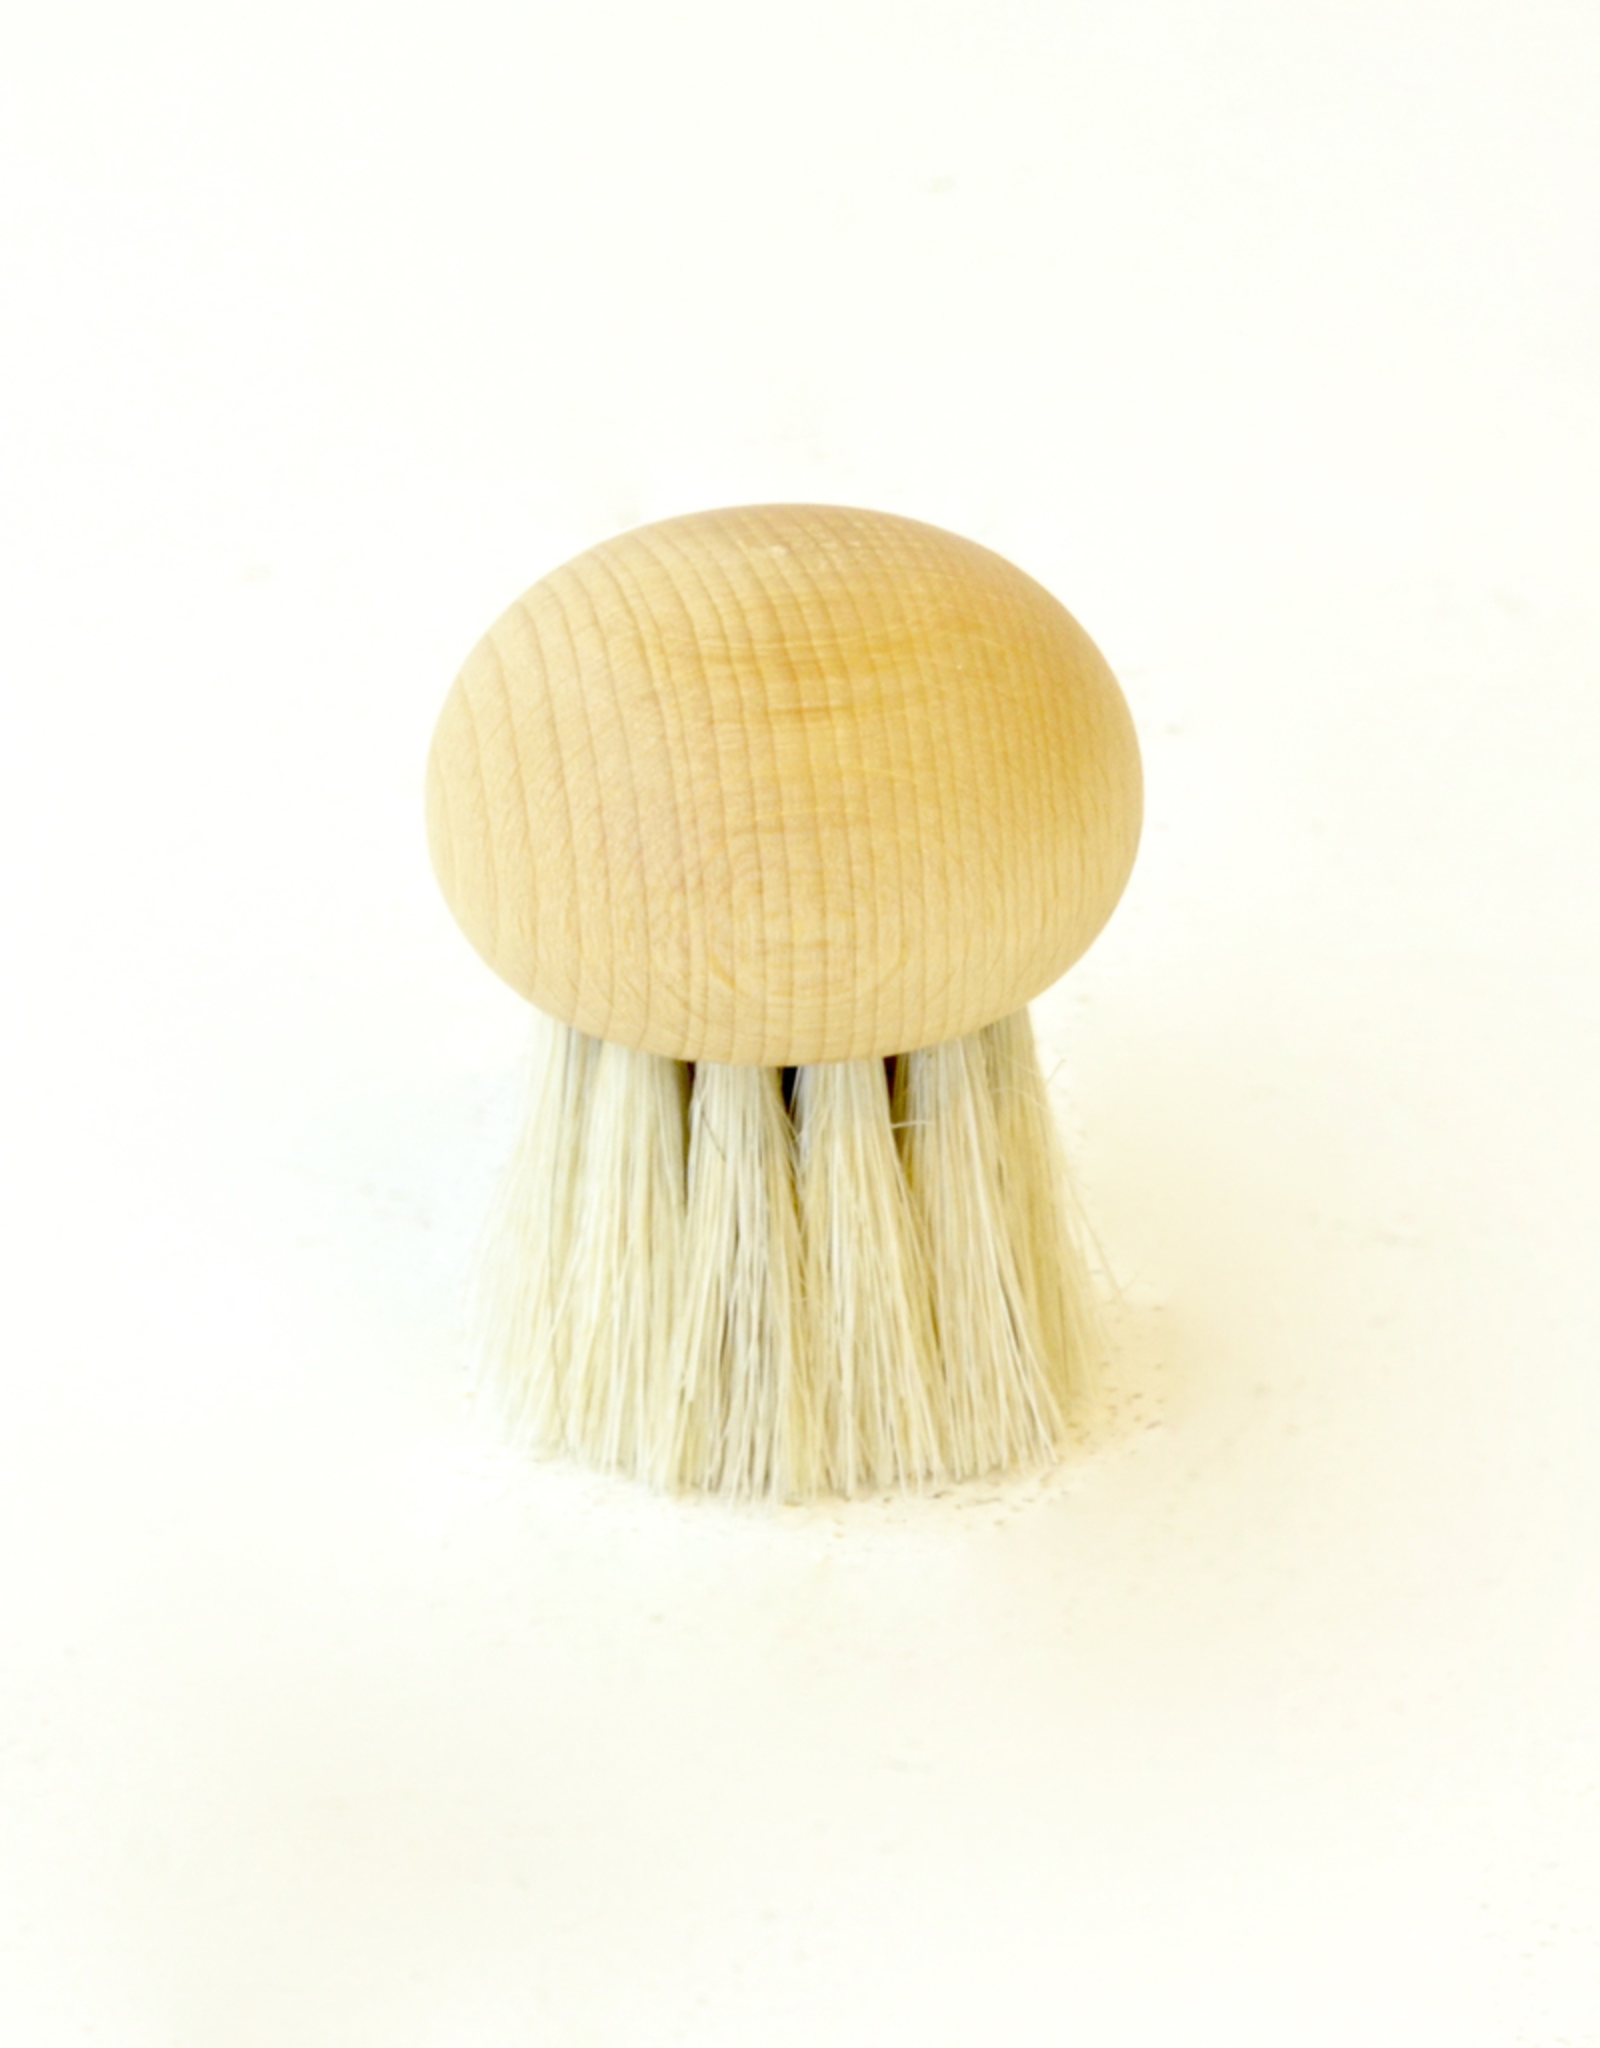 Beechwood Mushroom Brush